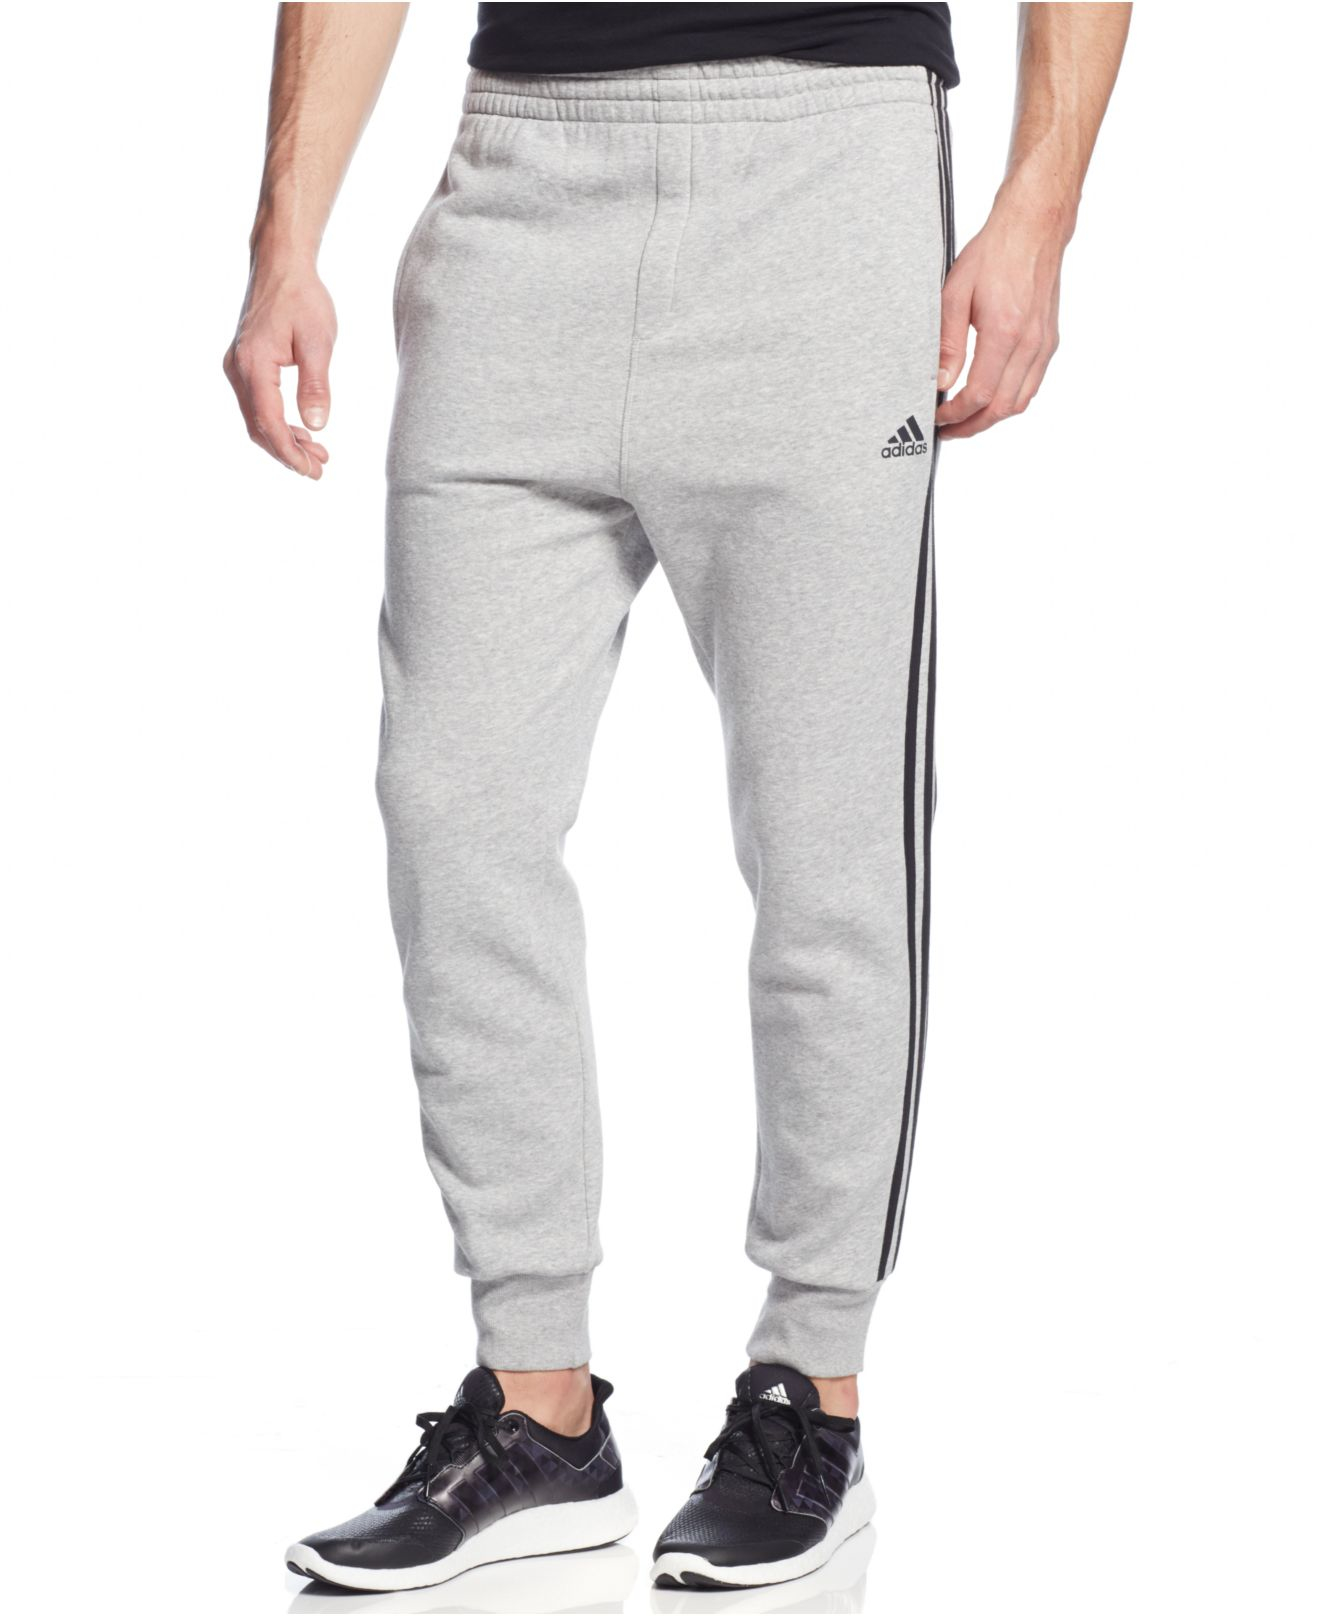 adidas Originals Men's Striped Slim-fit Joggers in Gray for Men - Lyst